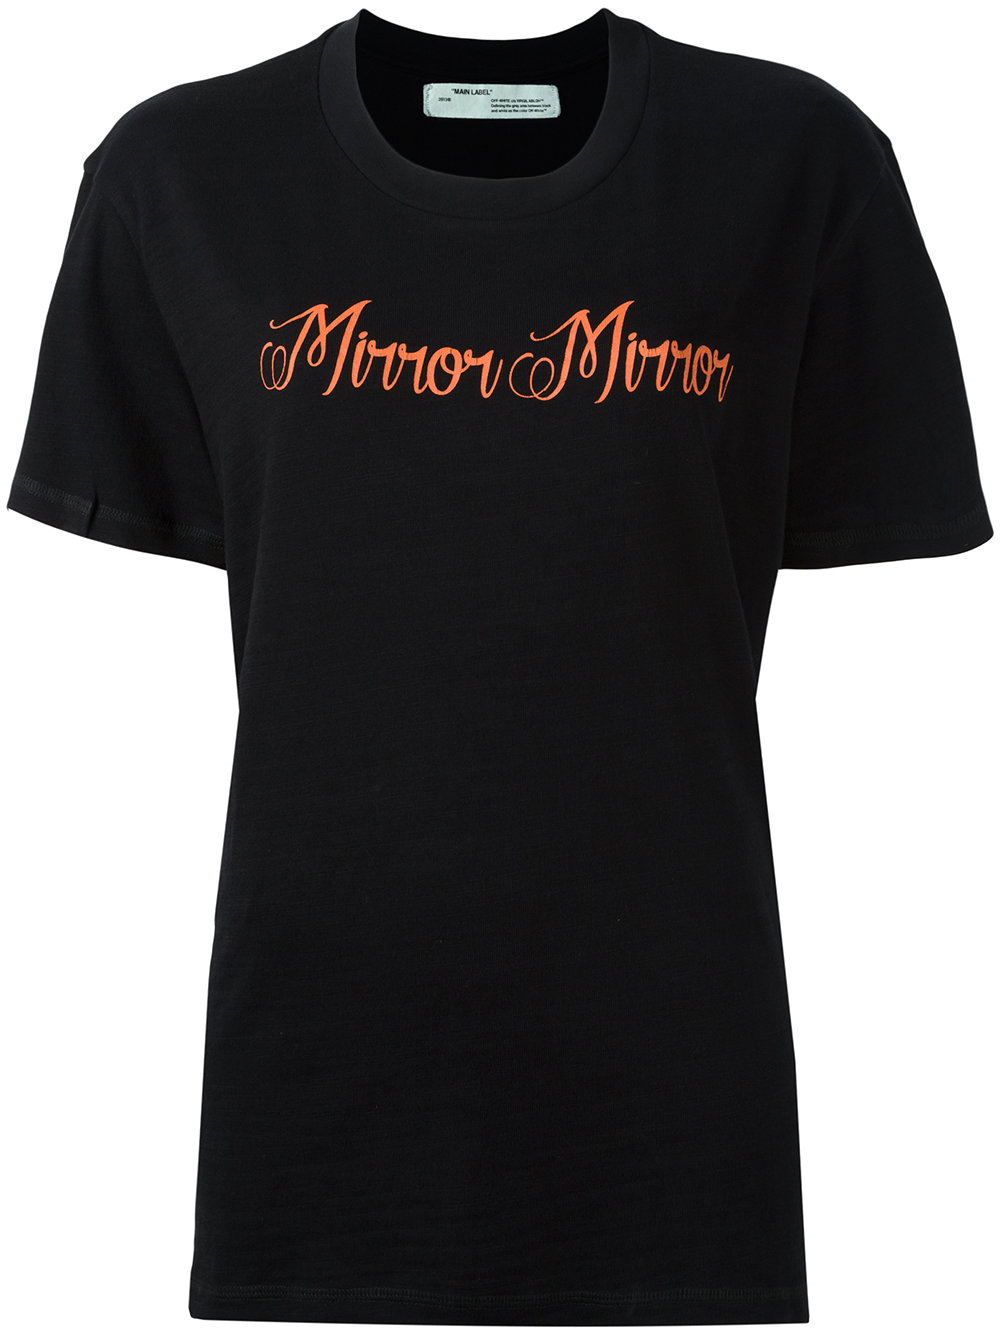 Off-White 'mirror mirror' print T-shirt Cheap Sale 1019 BLACK Women Clothing T-shirts & Jerseys